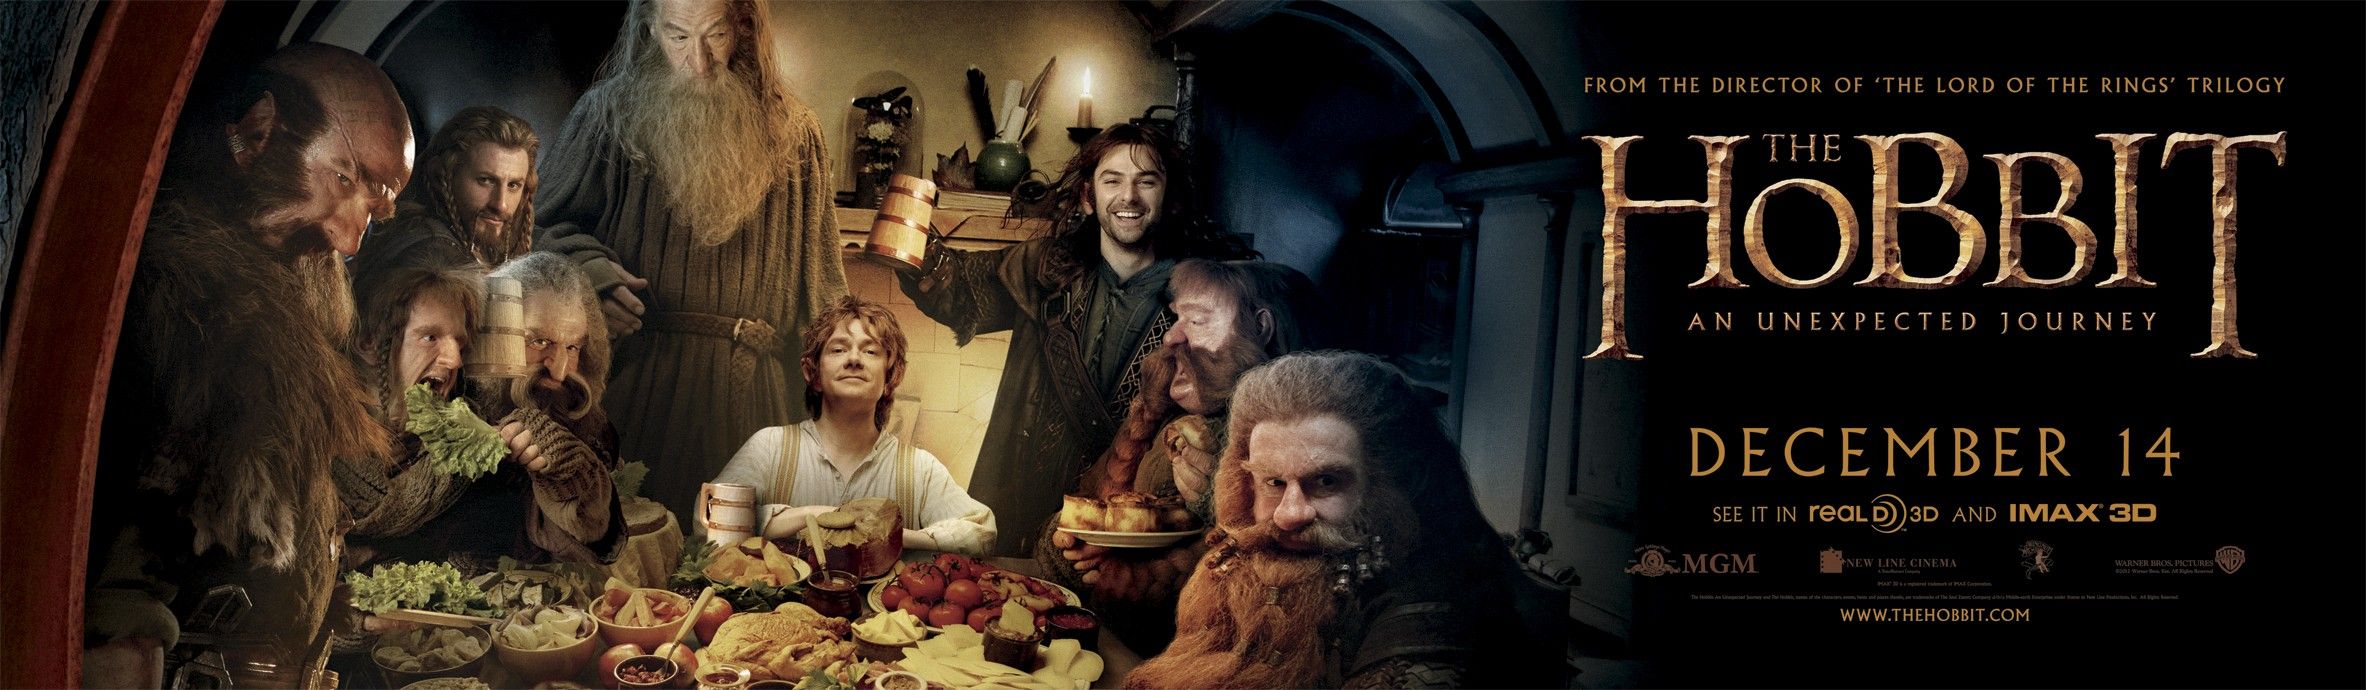 The Hobbit Poster 2